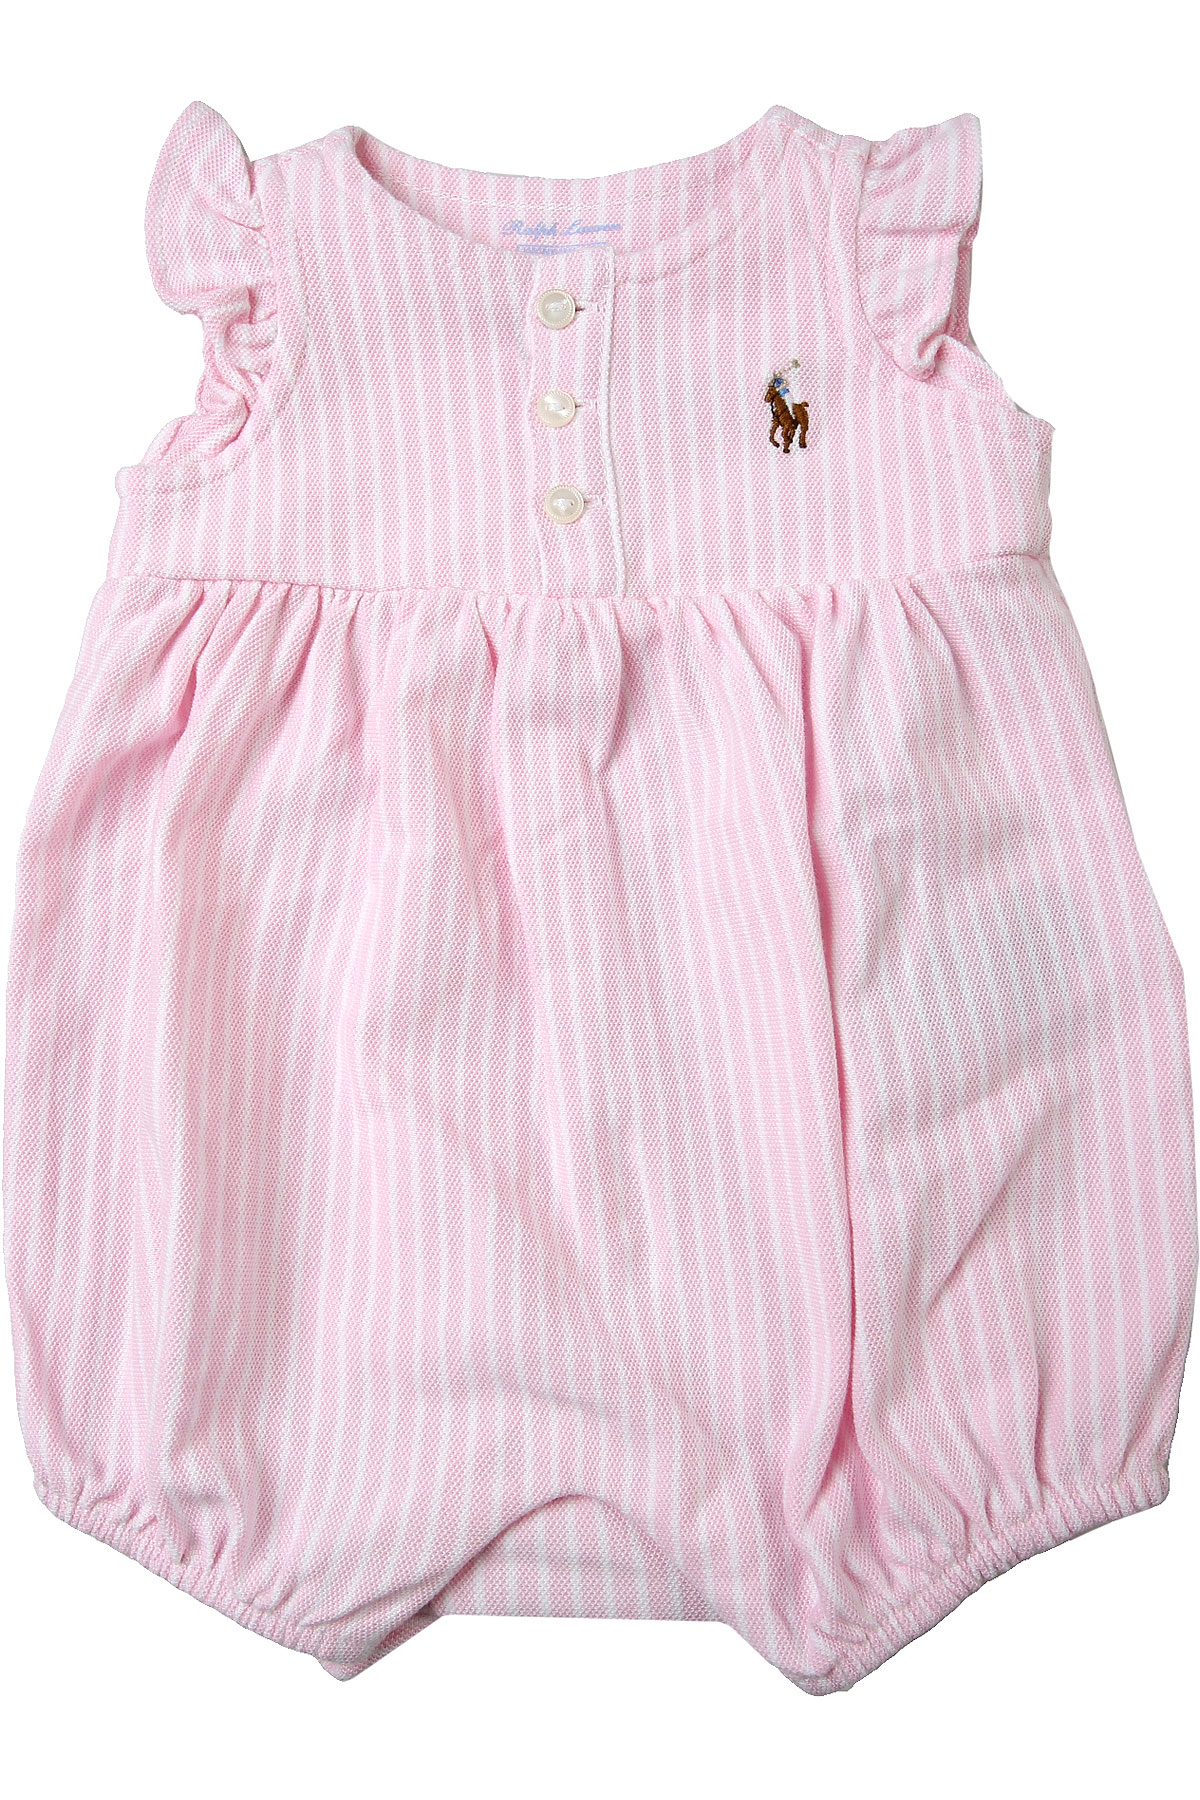 Baby Girl Clothing Ralph Lauren, Style code: 310833416006-006-